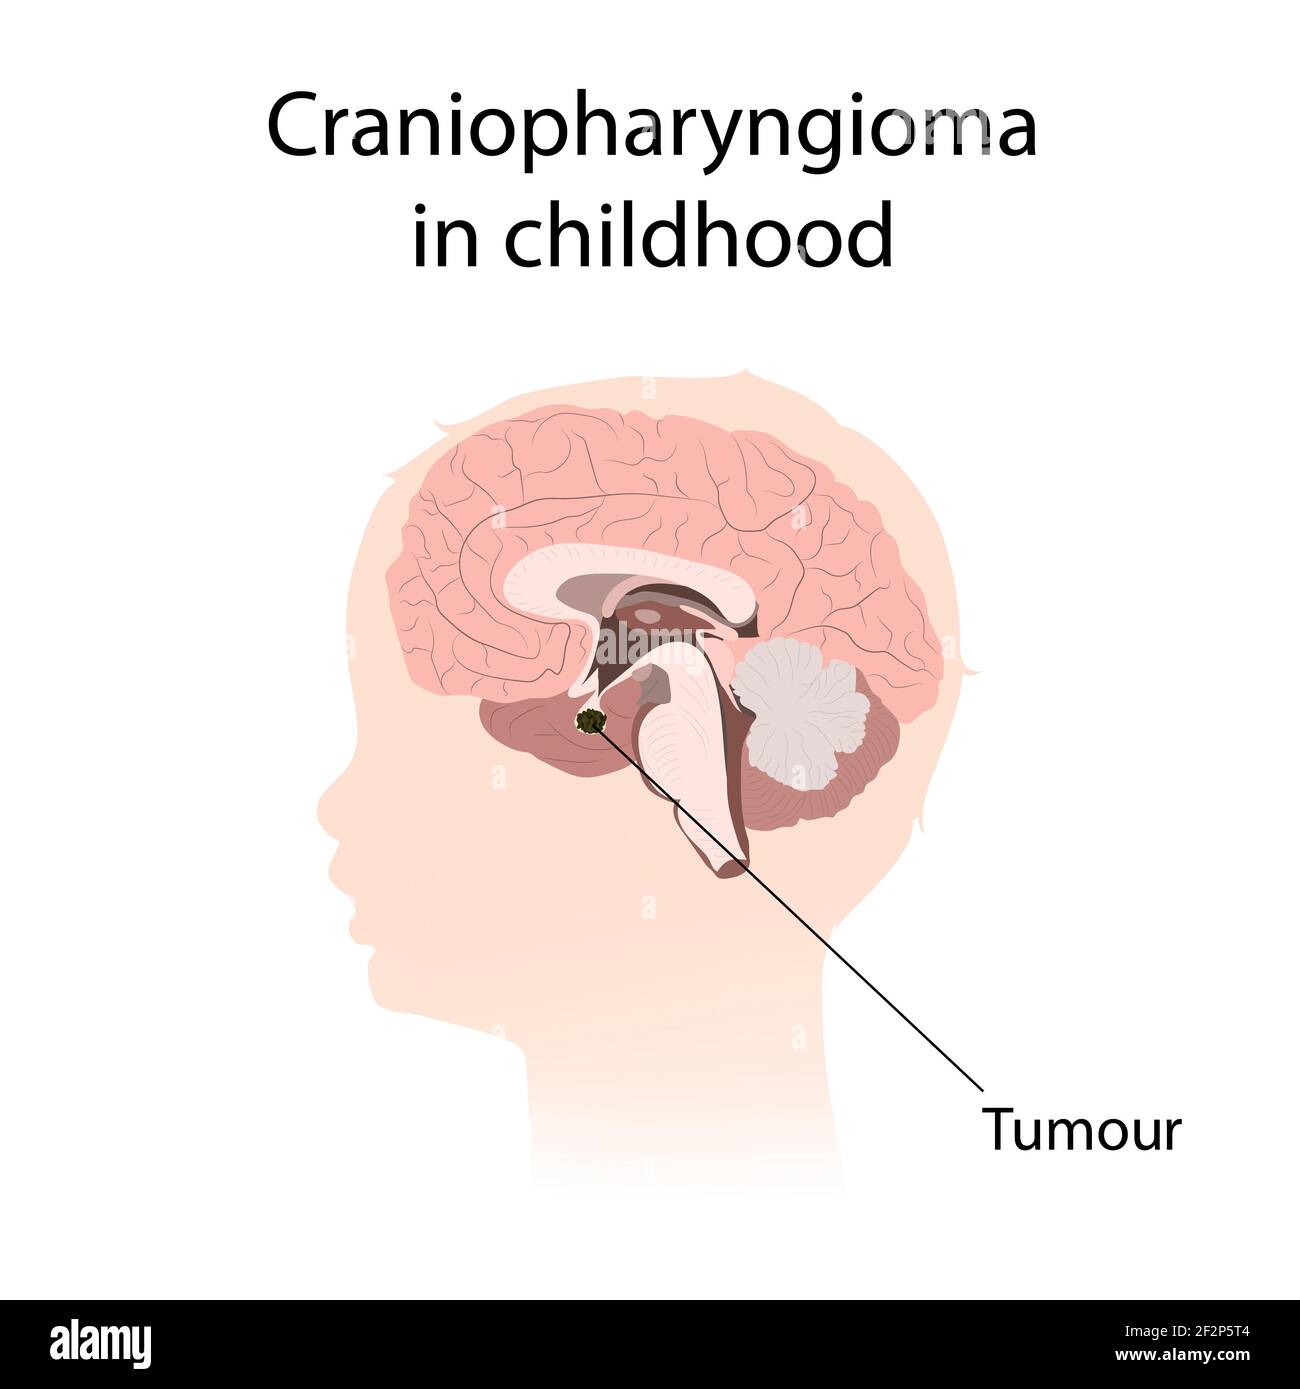 Craniopharyngioma in childhood, illustration Stock Photo